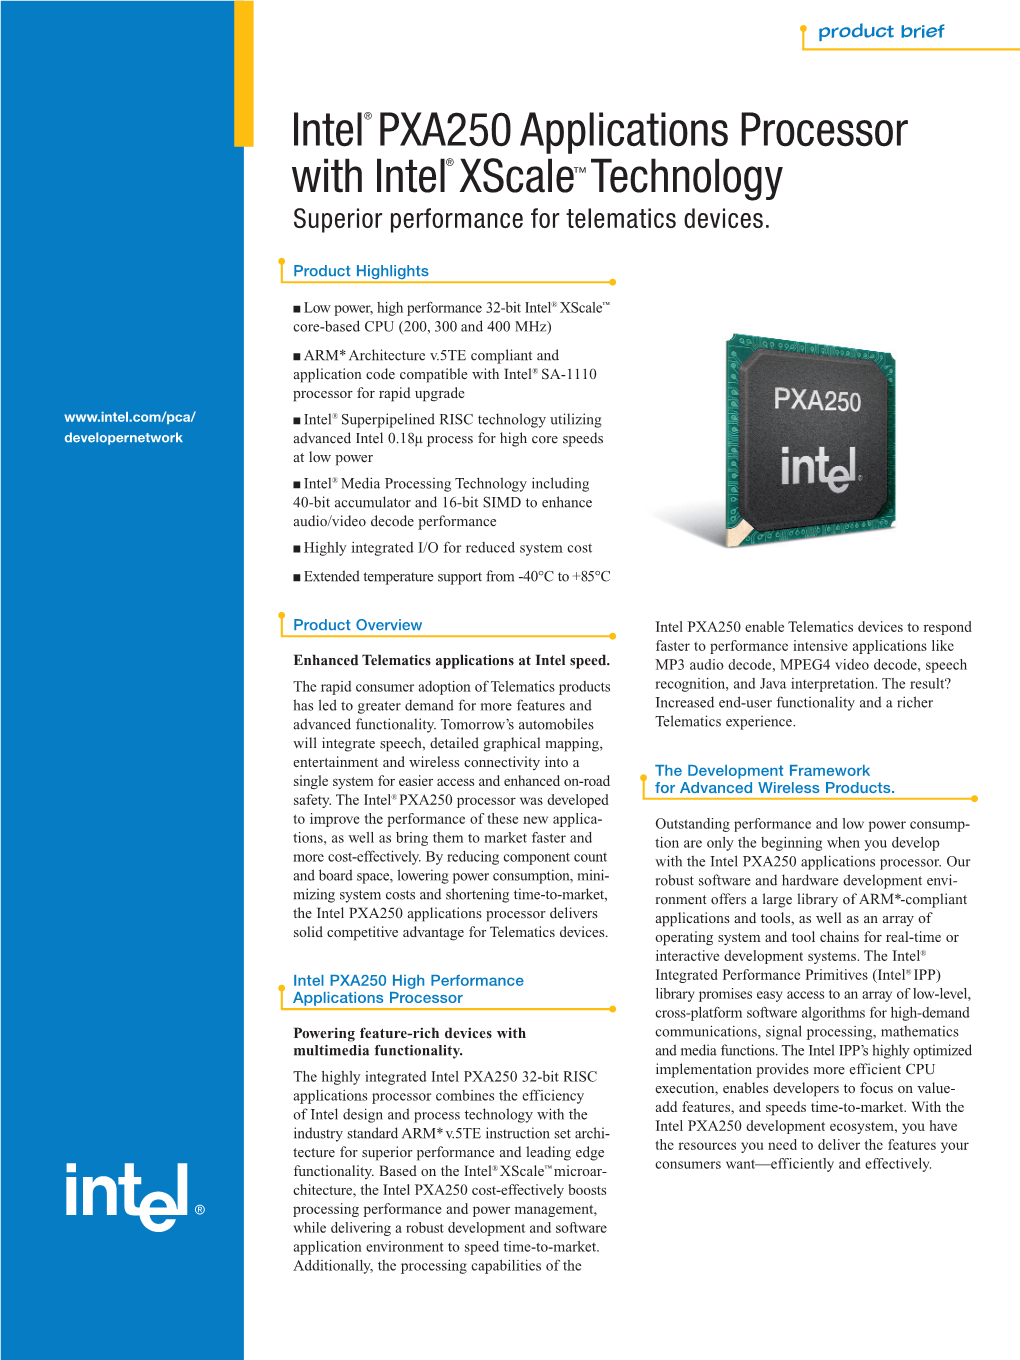 Intel® PXA250 Applications Processor with Intel® Xscale™ Technology